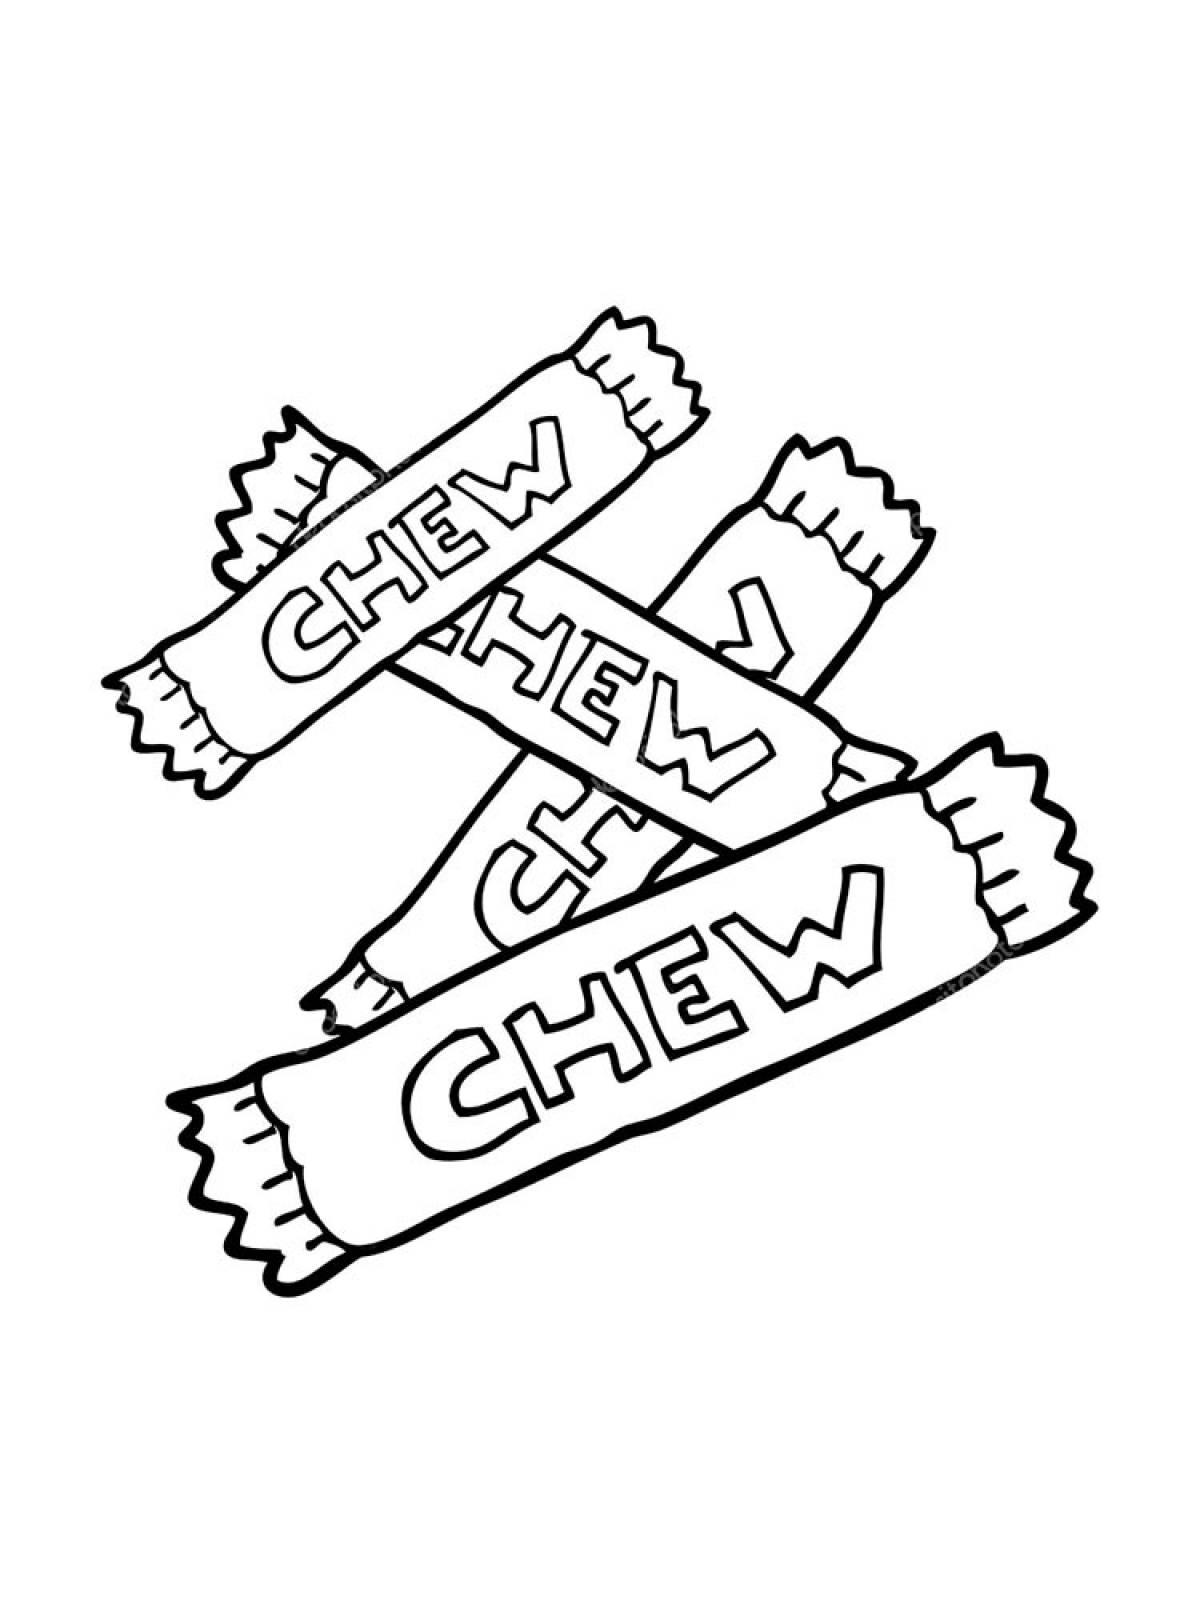 Three chewing gum